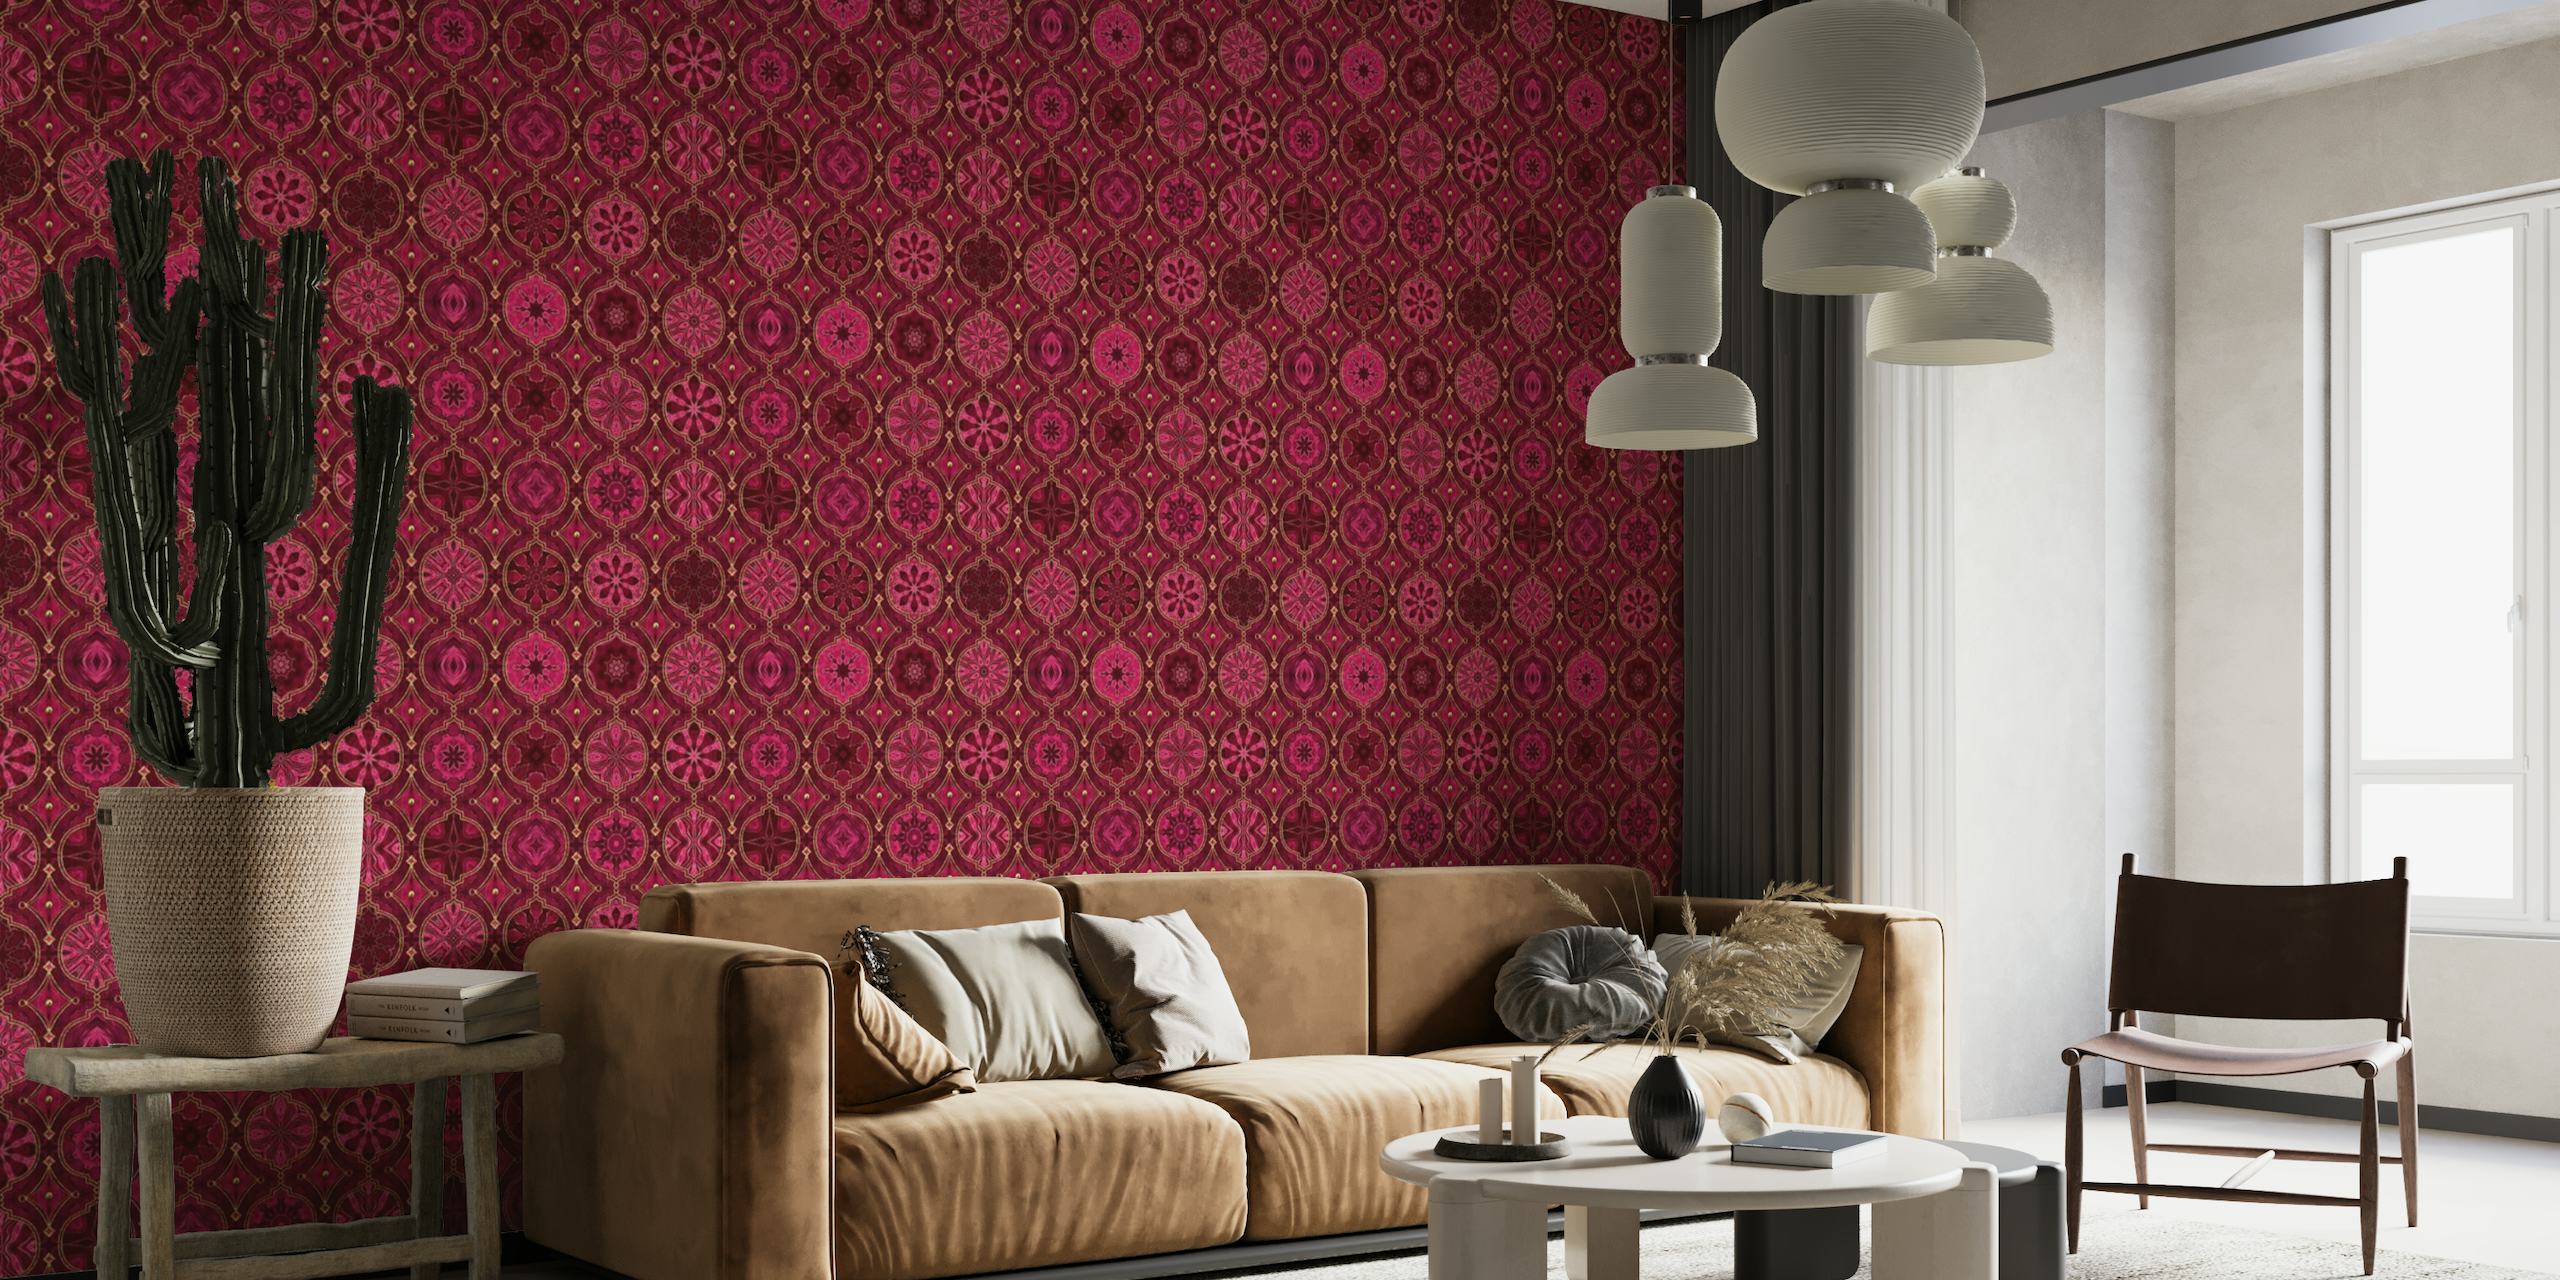 Treasures of Morocco Oriental Tile Design Burgundy Pink Gold behang